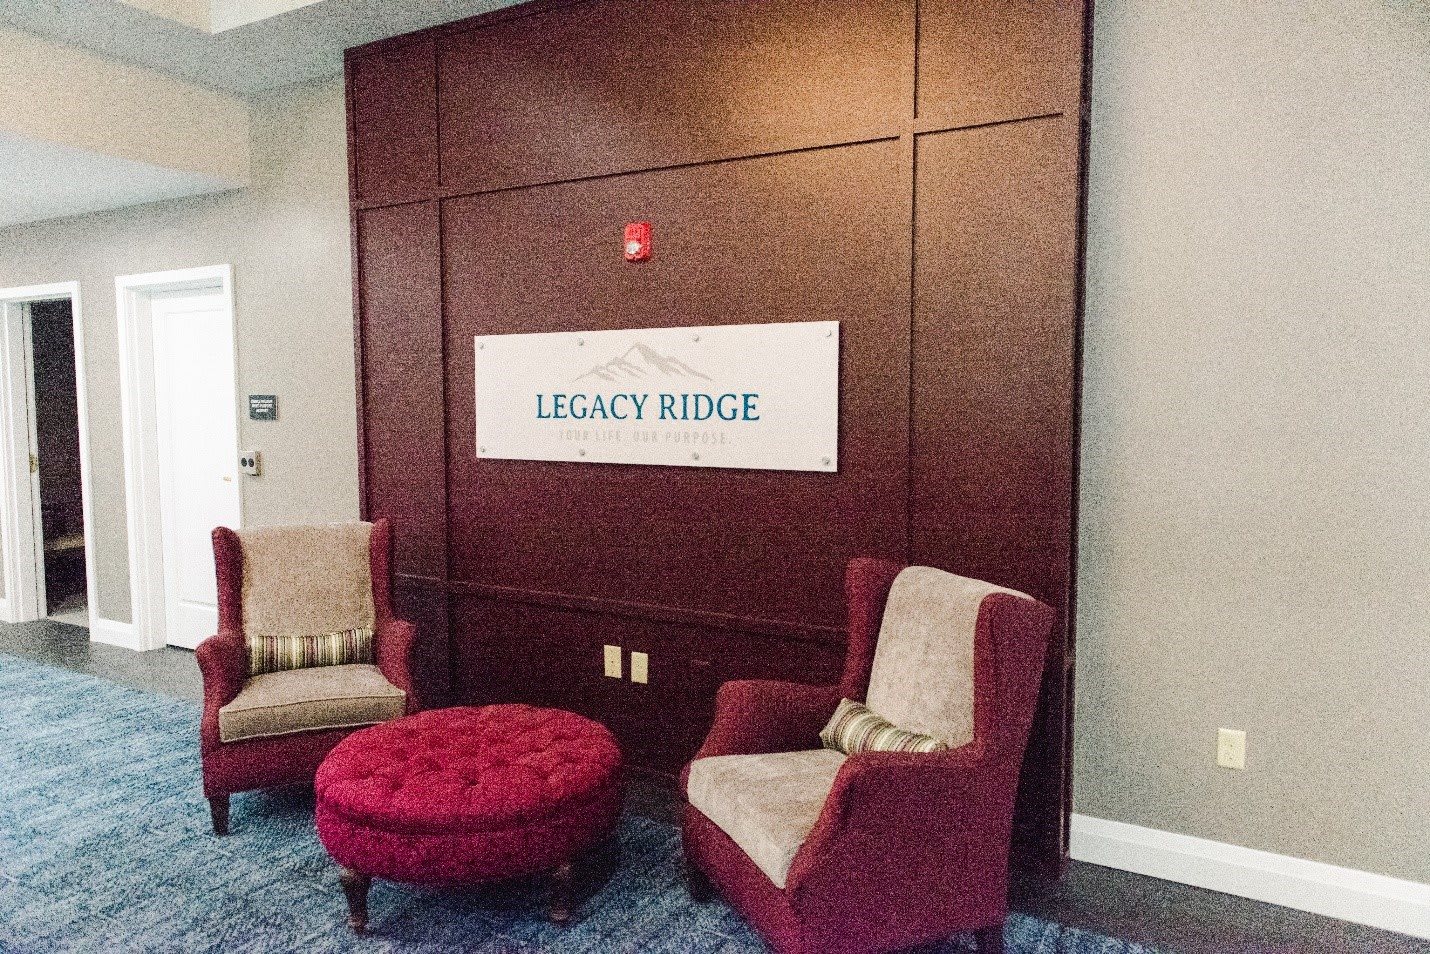 Legacy Ridge indoor common area